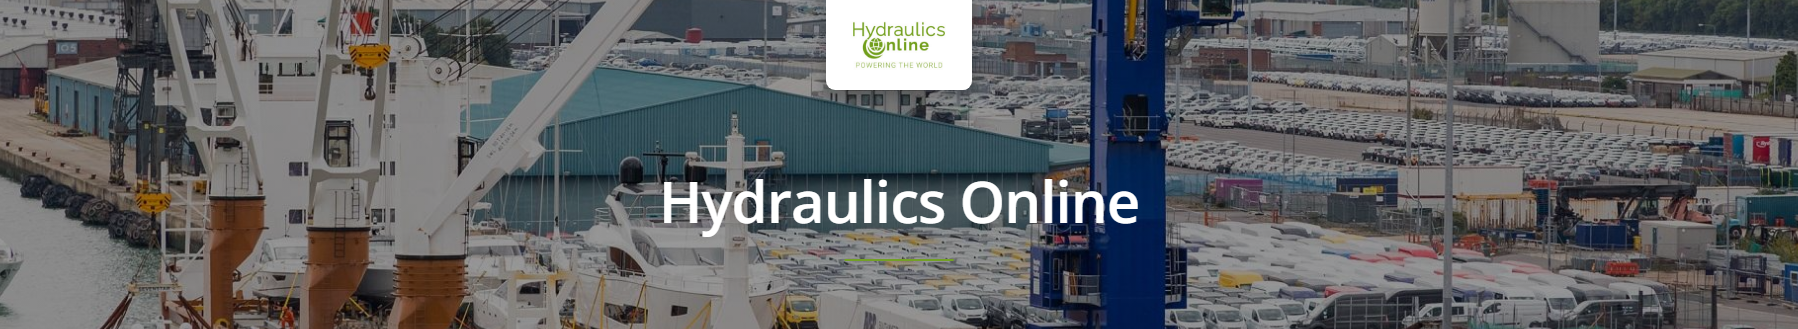 Hydraulics Online Cylinders